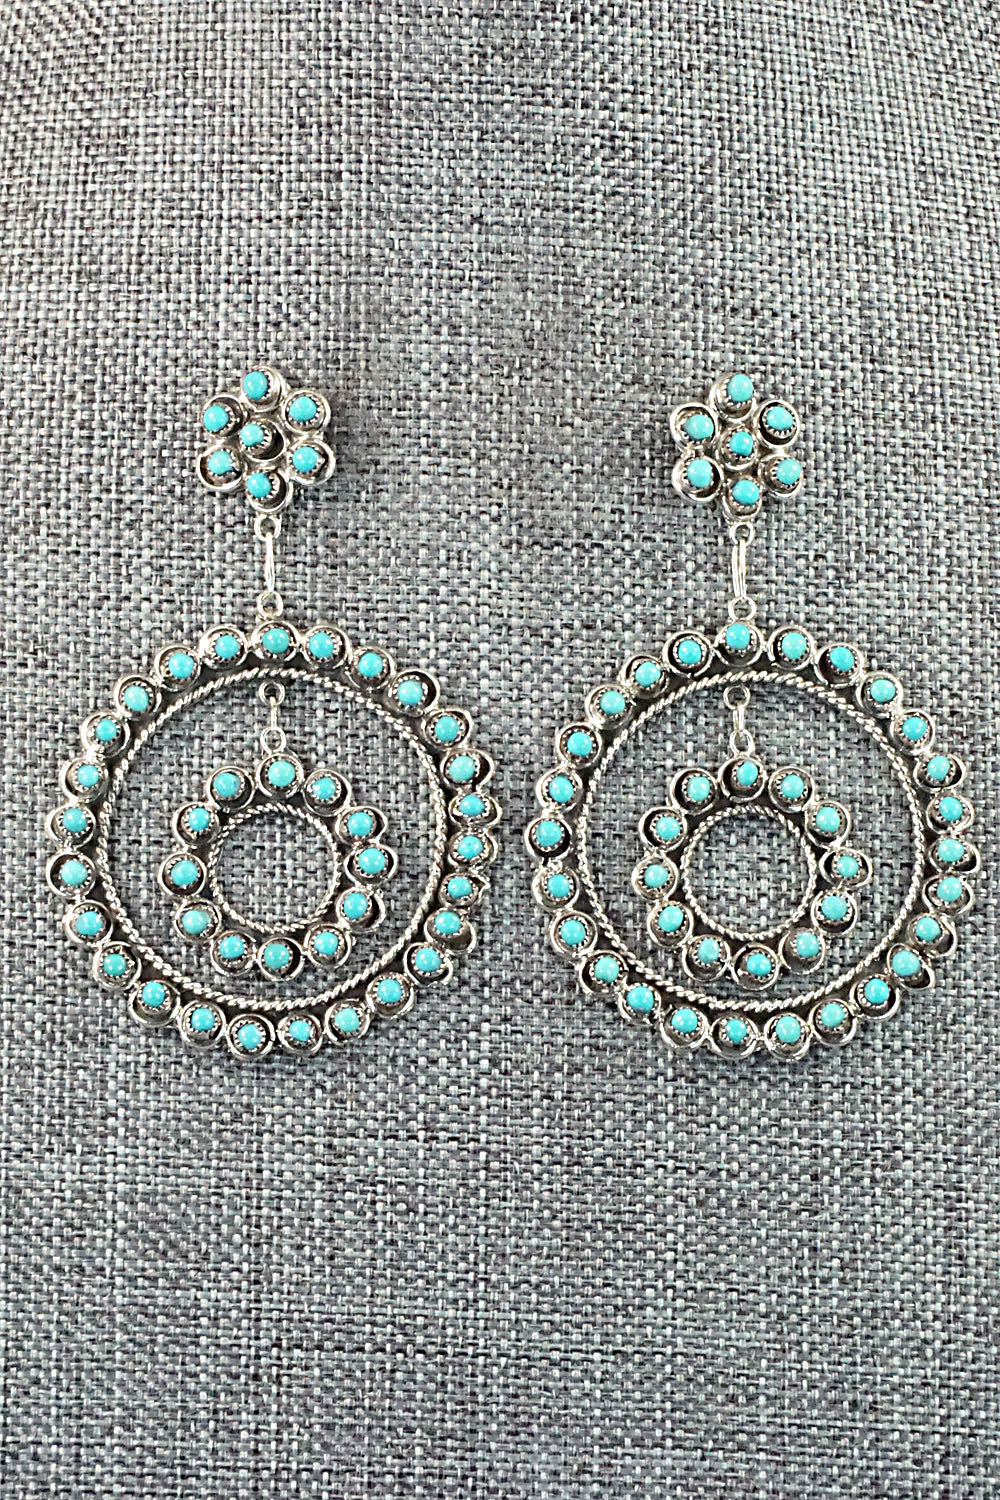 Turquoise & Sterling Silver Pendant and Earrings Set - Waylon Johnson